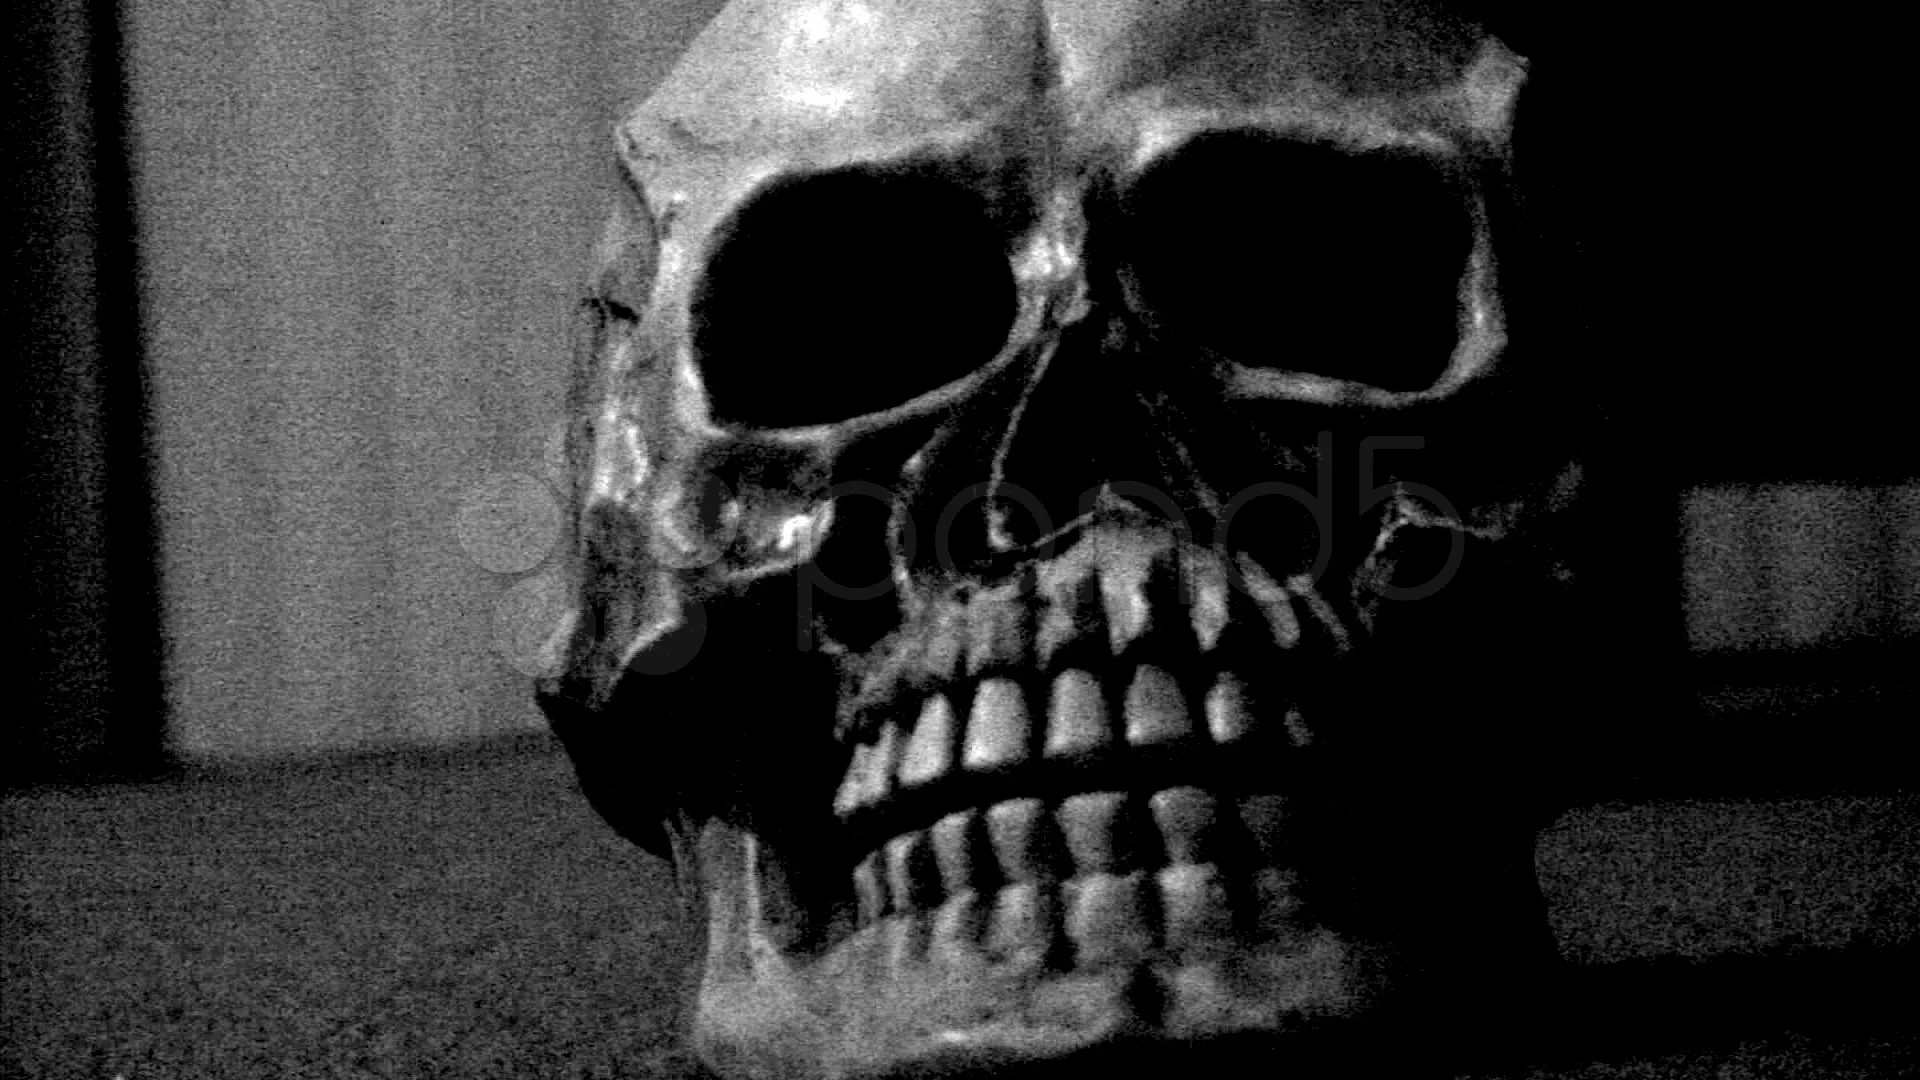 Wallpaper  minimalism astronaut skull optical illusion head darkness  black and white monochrome photography bone 1920x1200  sdlmer  201404   HD Wallpapers  WallHere